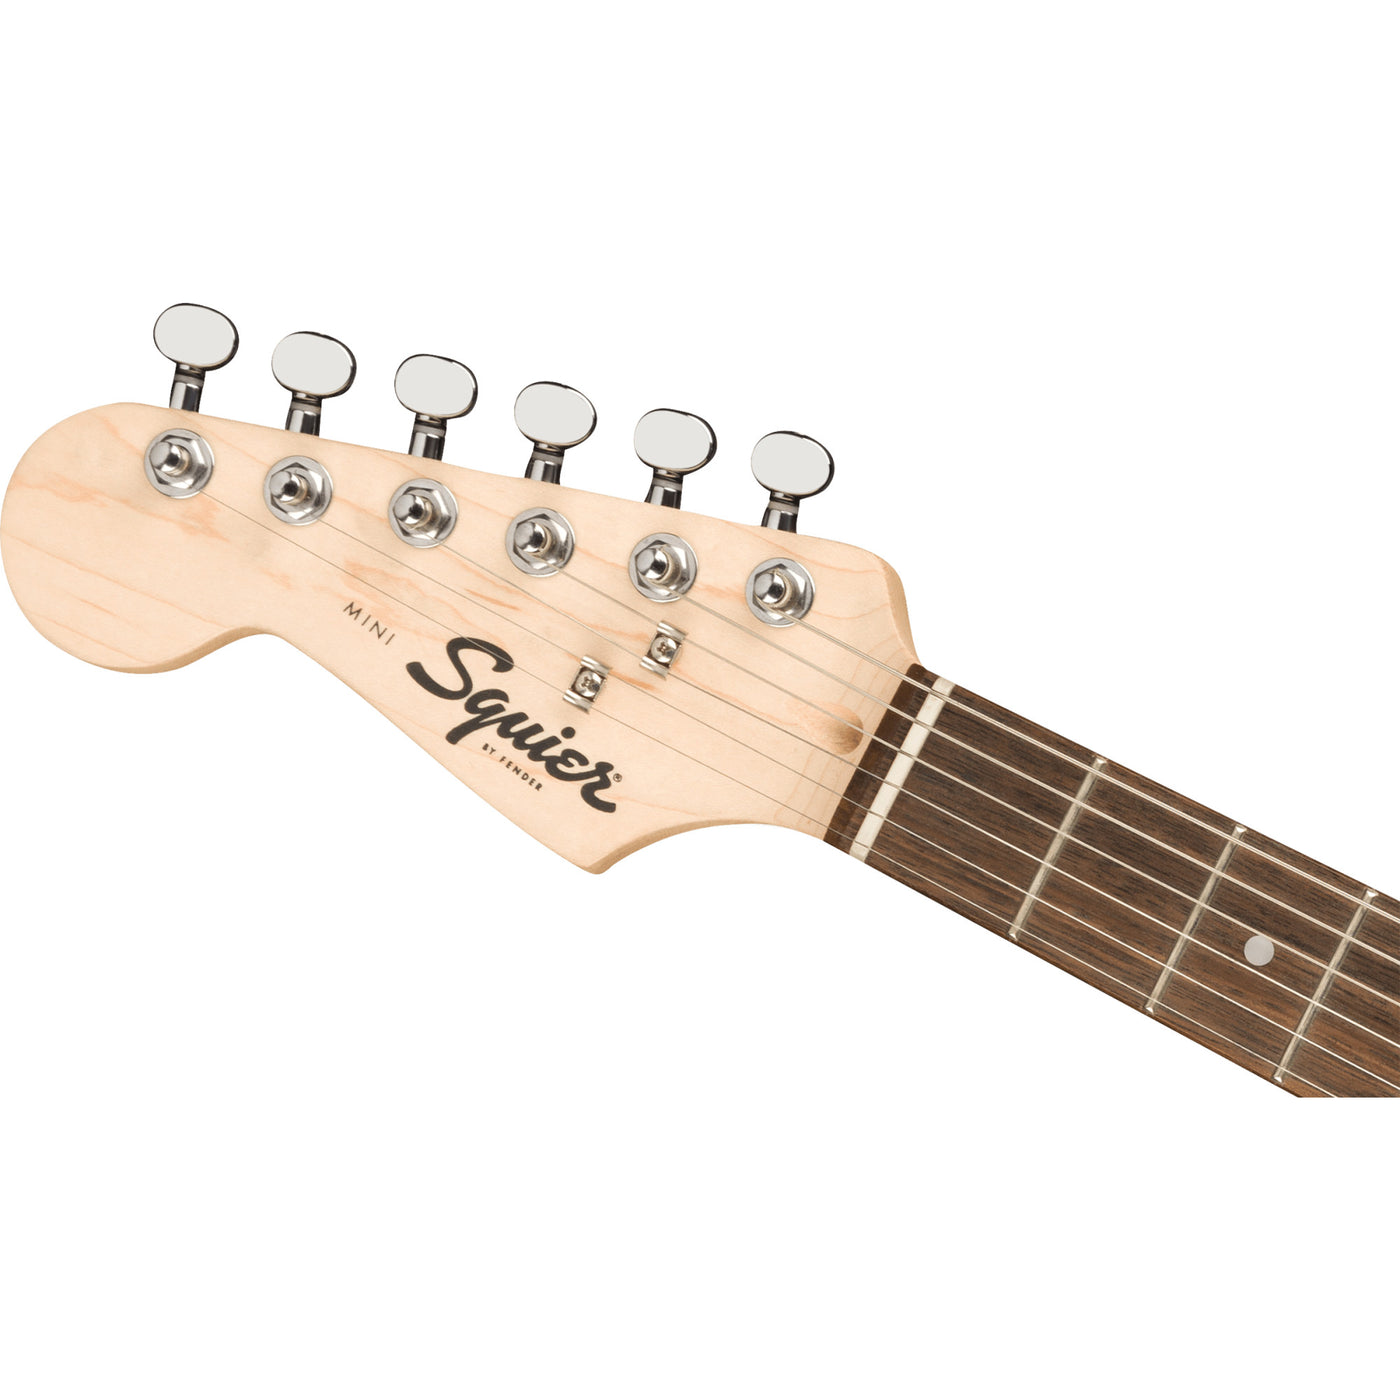 Fender Mini Stratocaster Left Handed Electric Guitar, Black (0370123506)